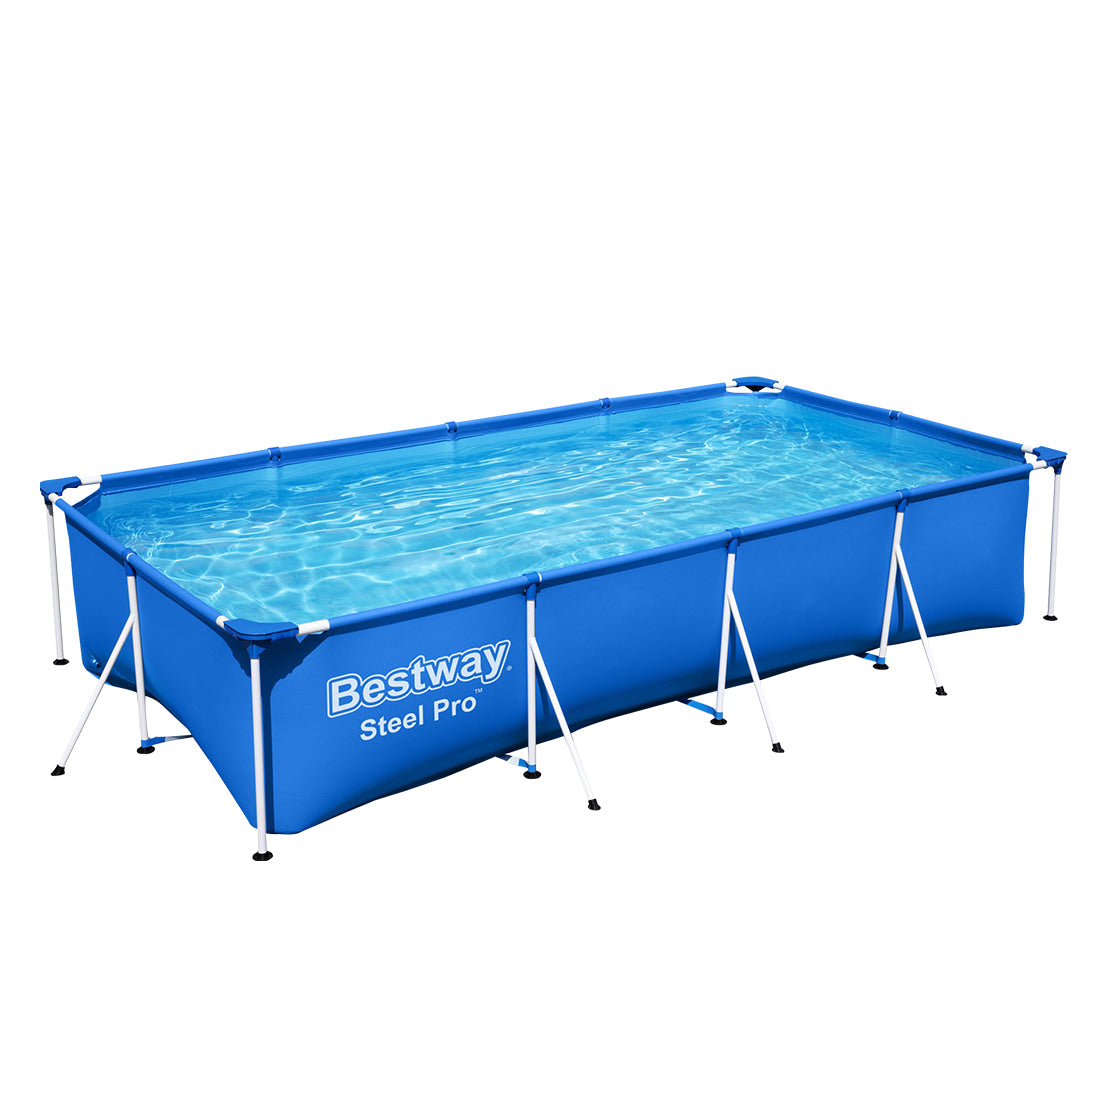 Bestway Steel Pro™ Above Ground Pool with Filter Pump - 4.00m x 2.11m x 81cm